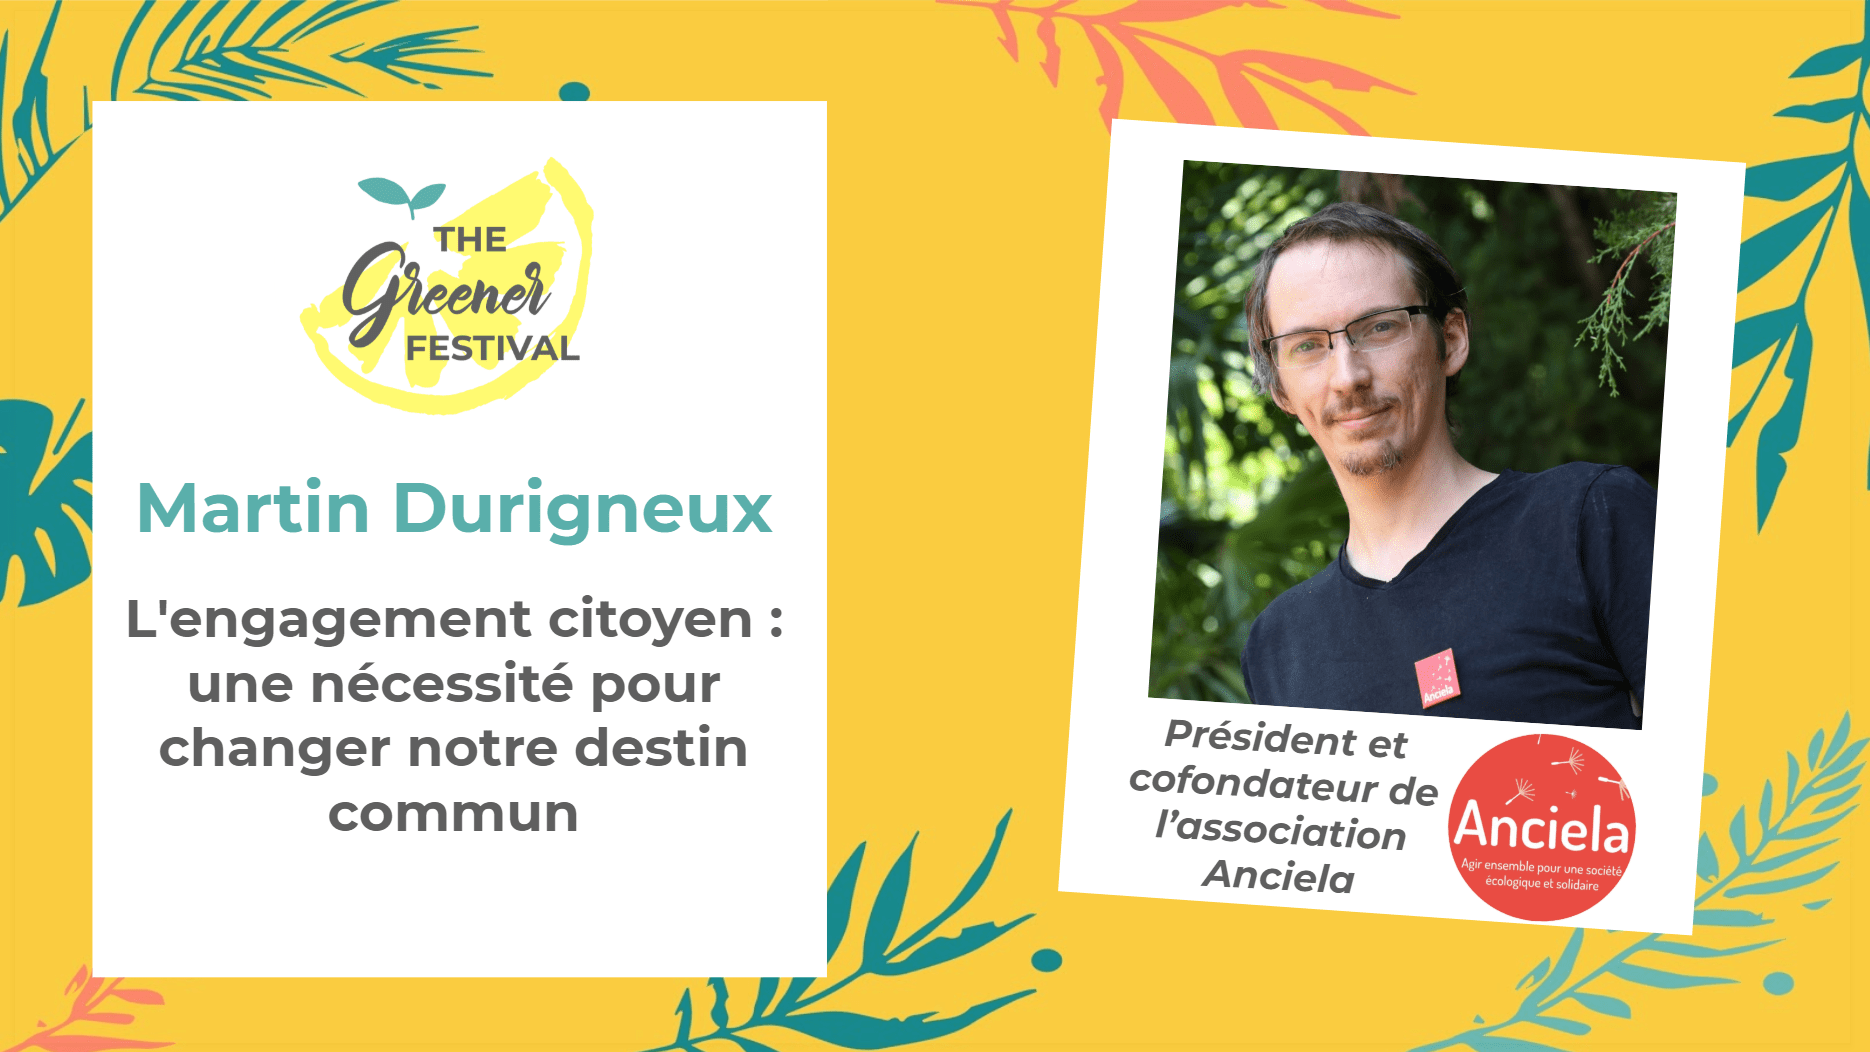 Martin Durigneux - Anciela - The Greener Festival 2019